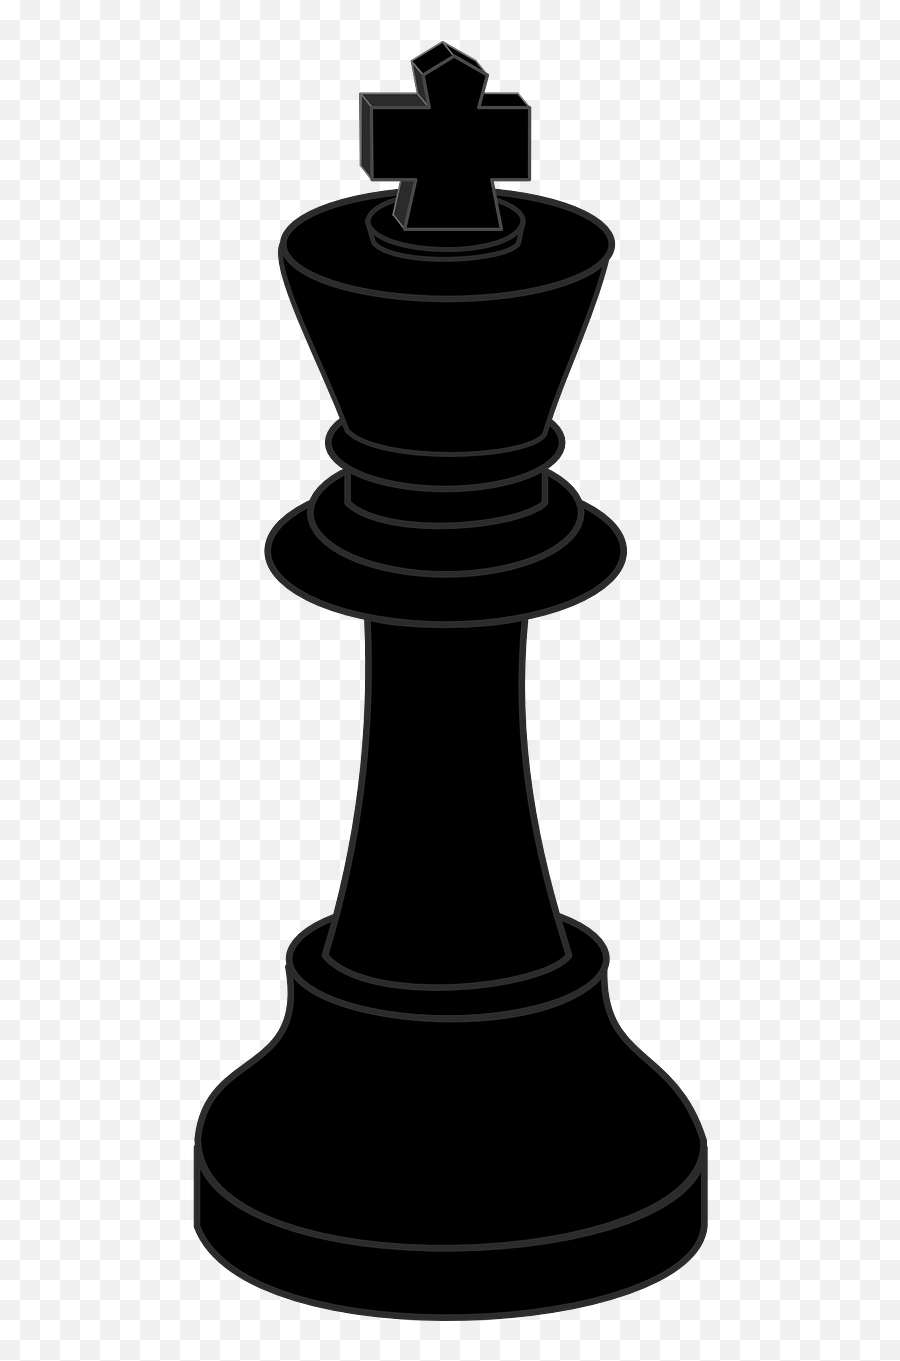 King Chess Black Figure Game - Chess Pieces Black King Emoji,Chess King Emoji